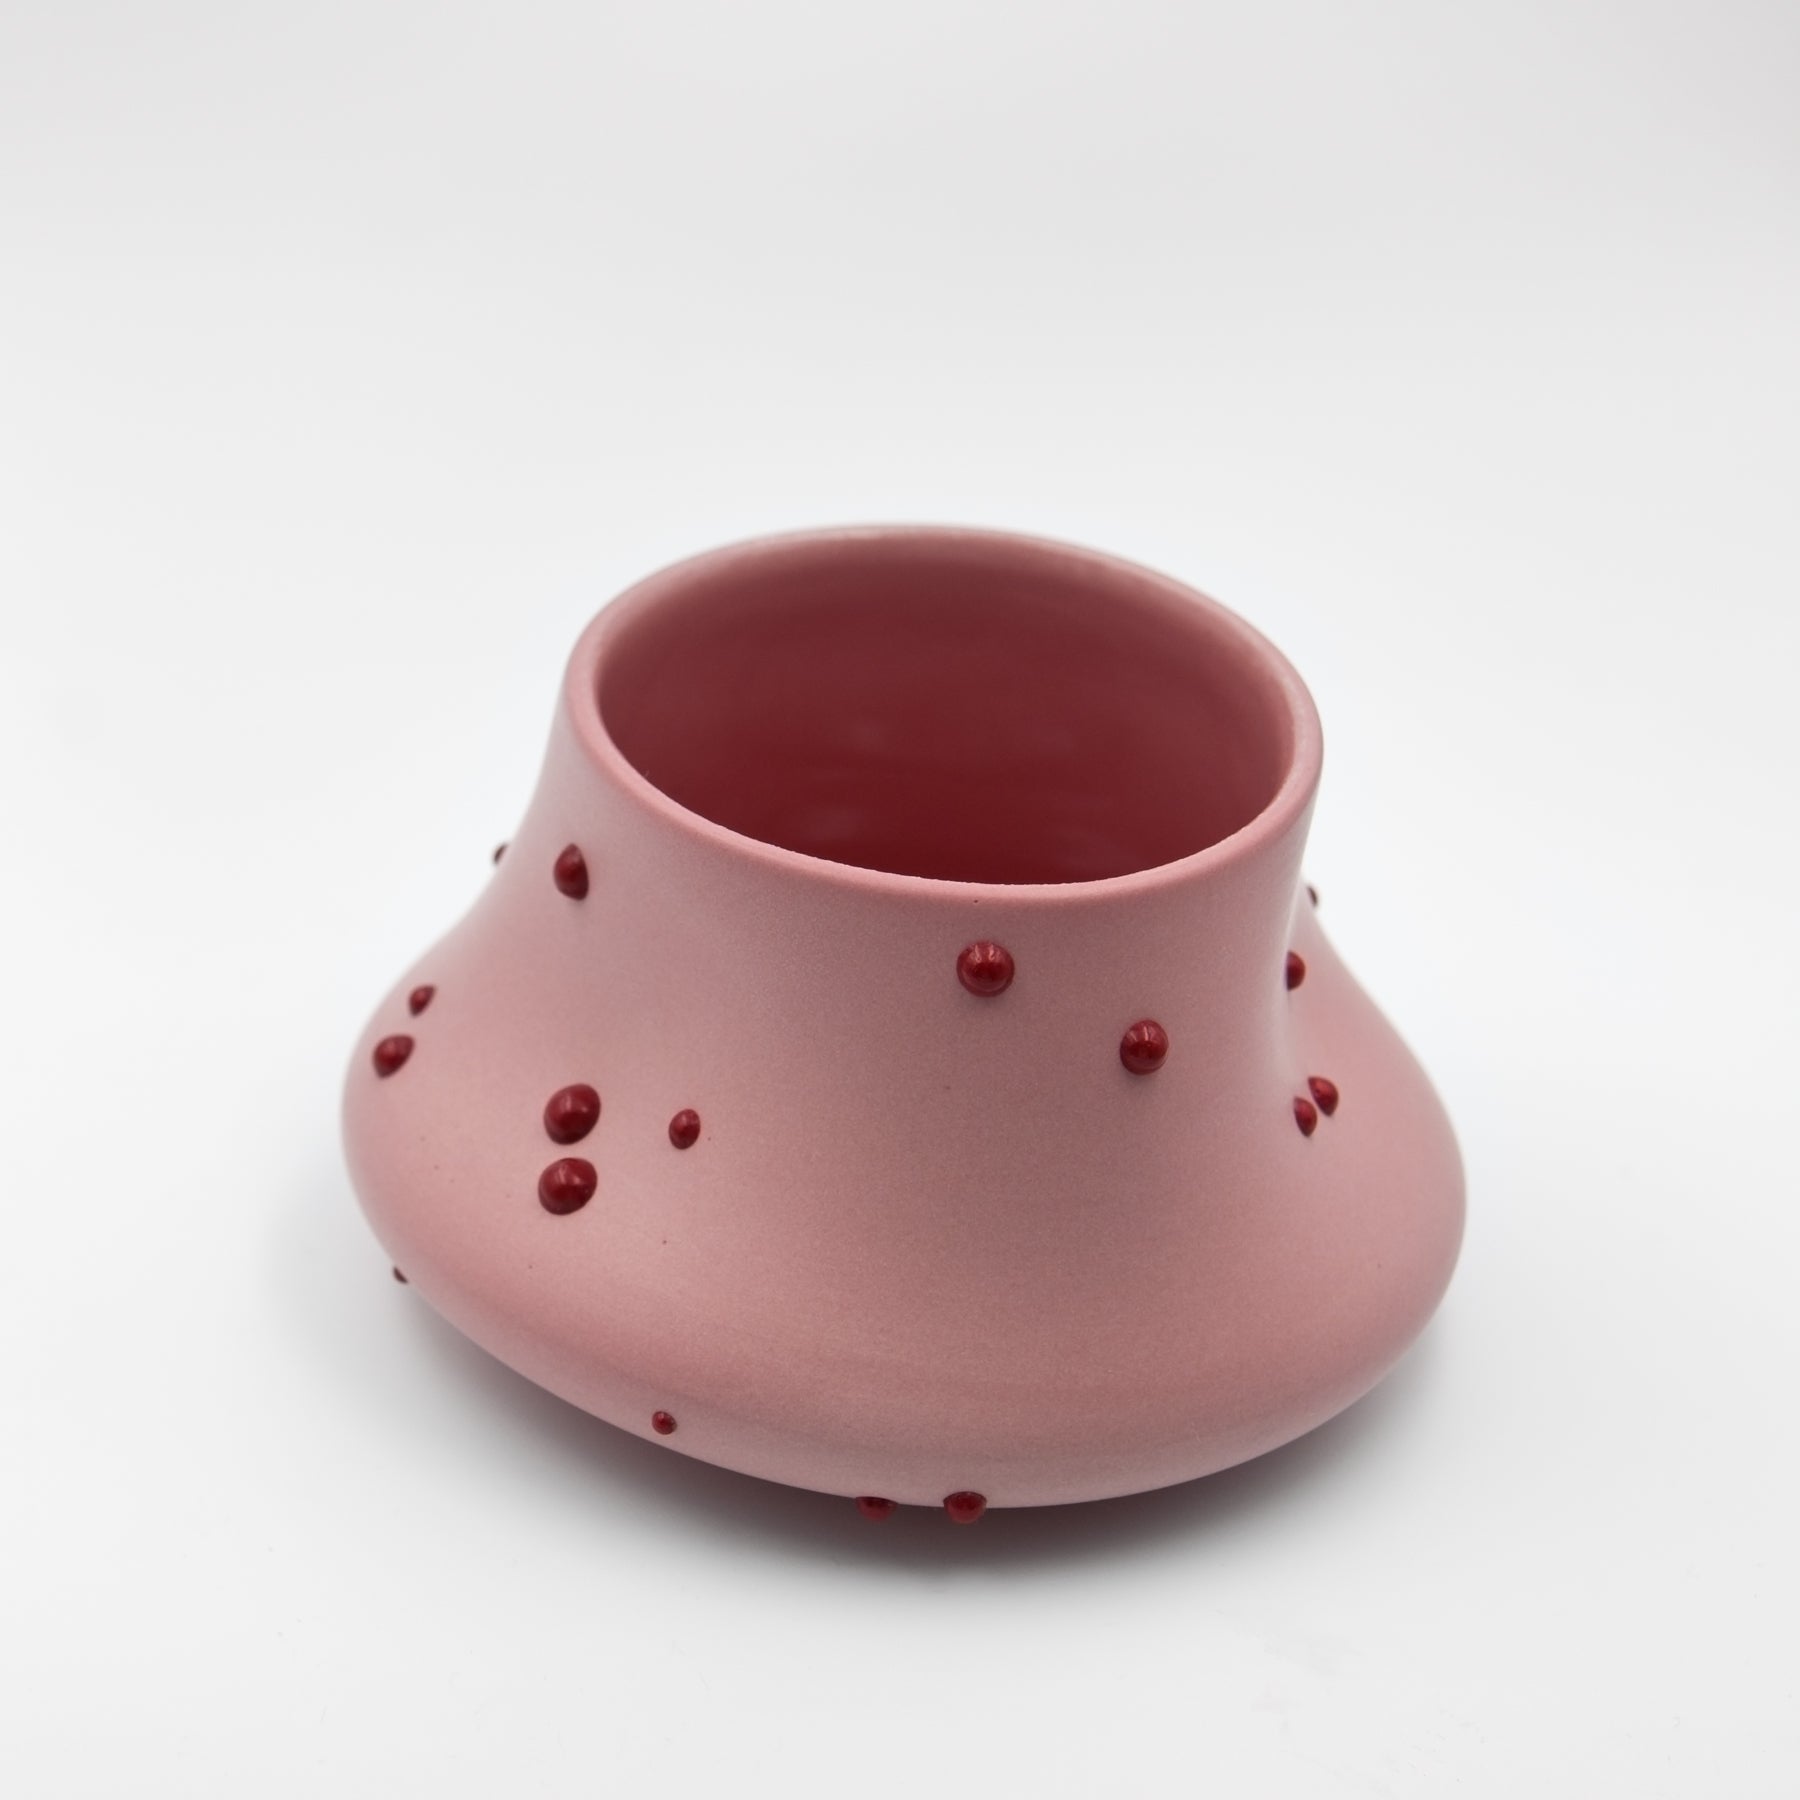 Peckii cup, pink-burgundy